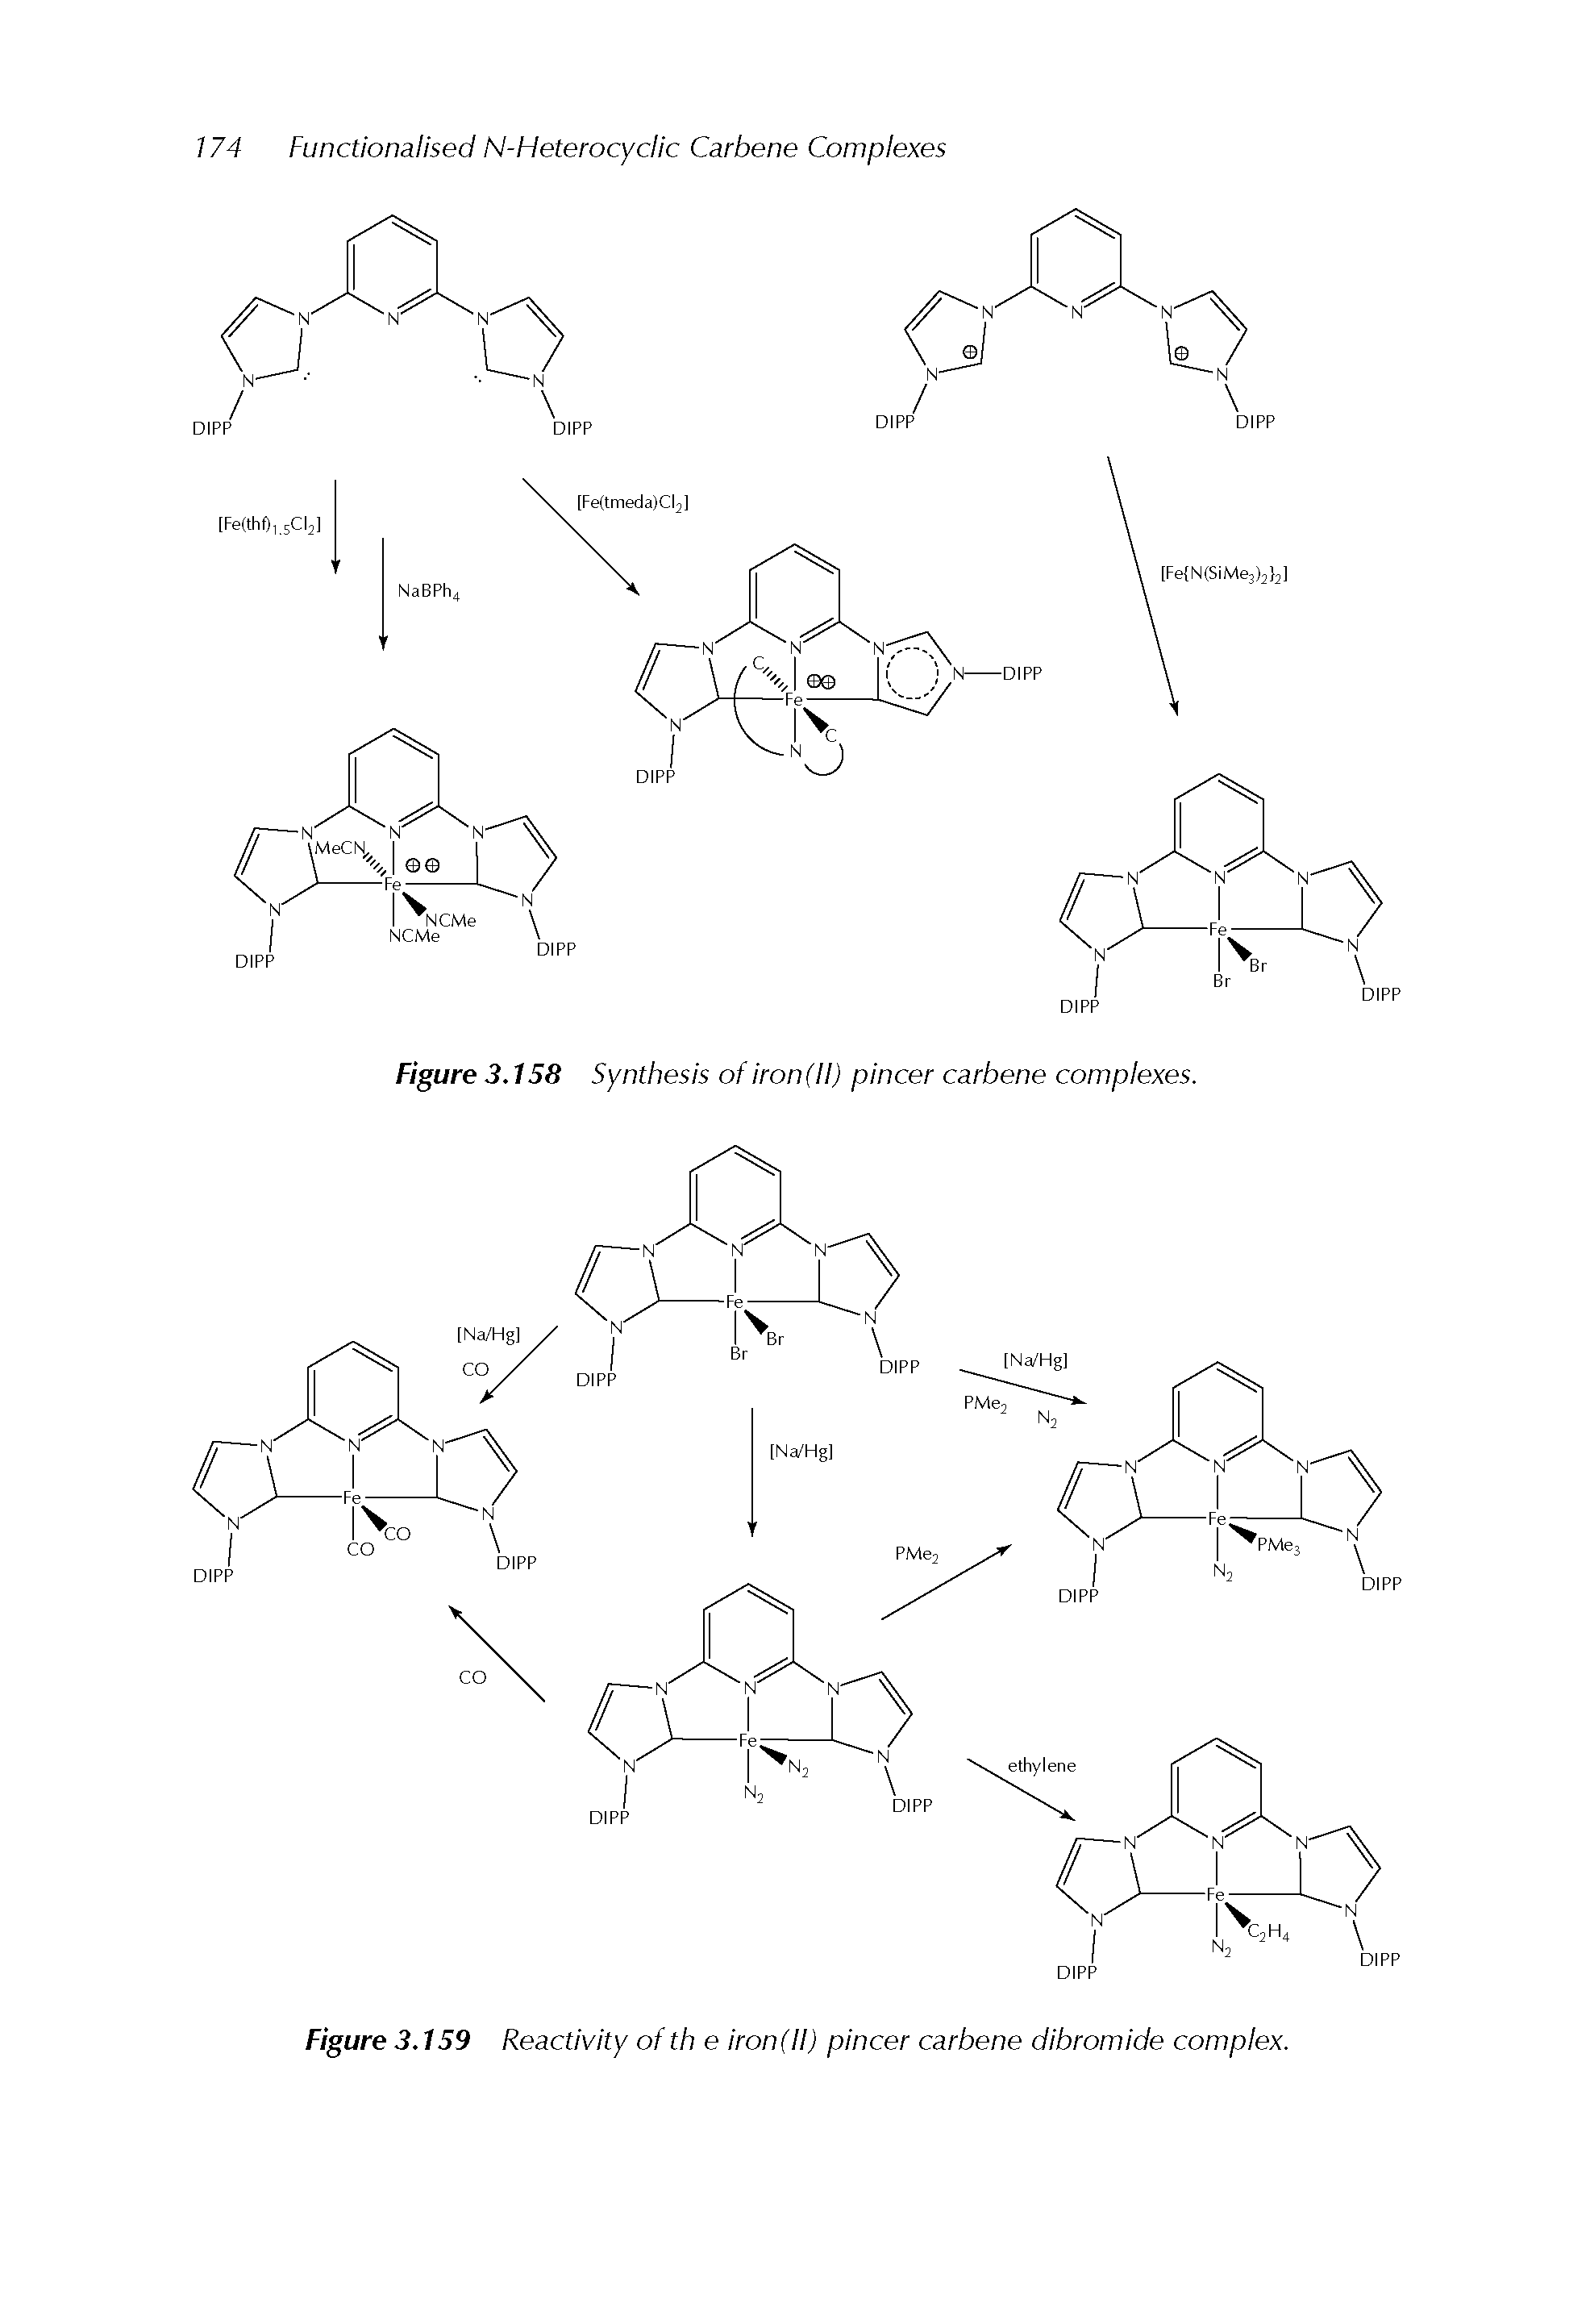 Figure 3,159 Reactivity ofth e iron (II) pincer carbene dibromide complex.